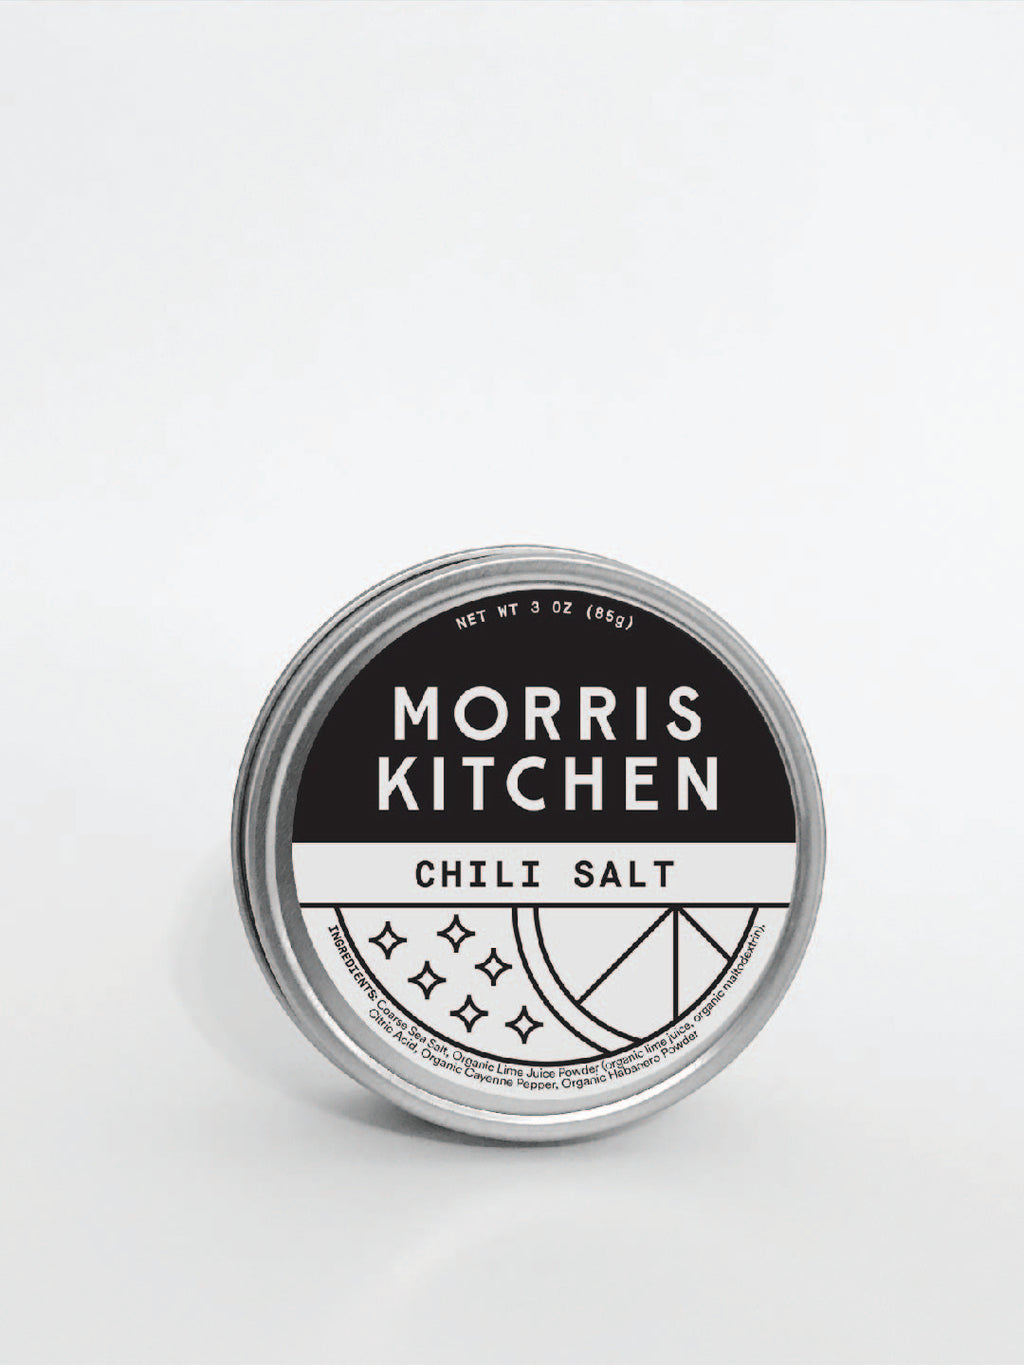 Chili Salt by Morris Kitchen